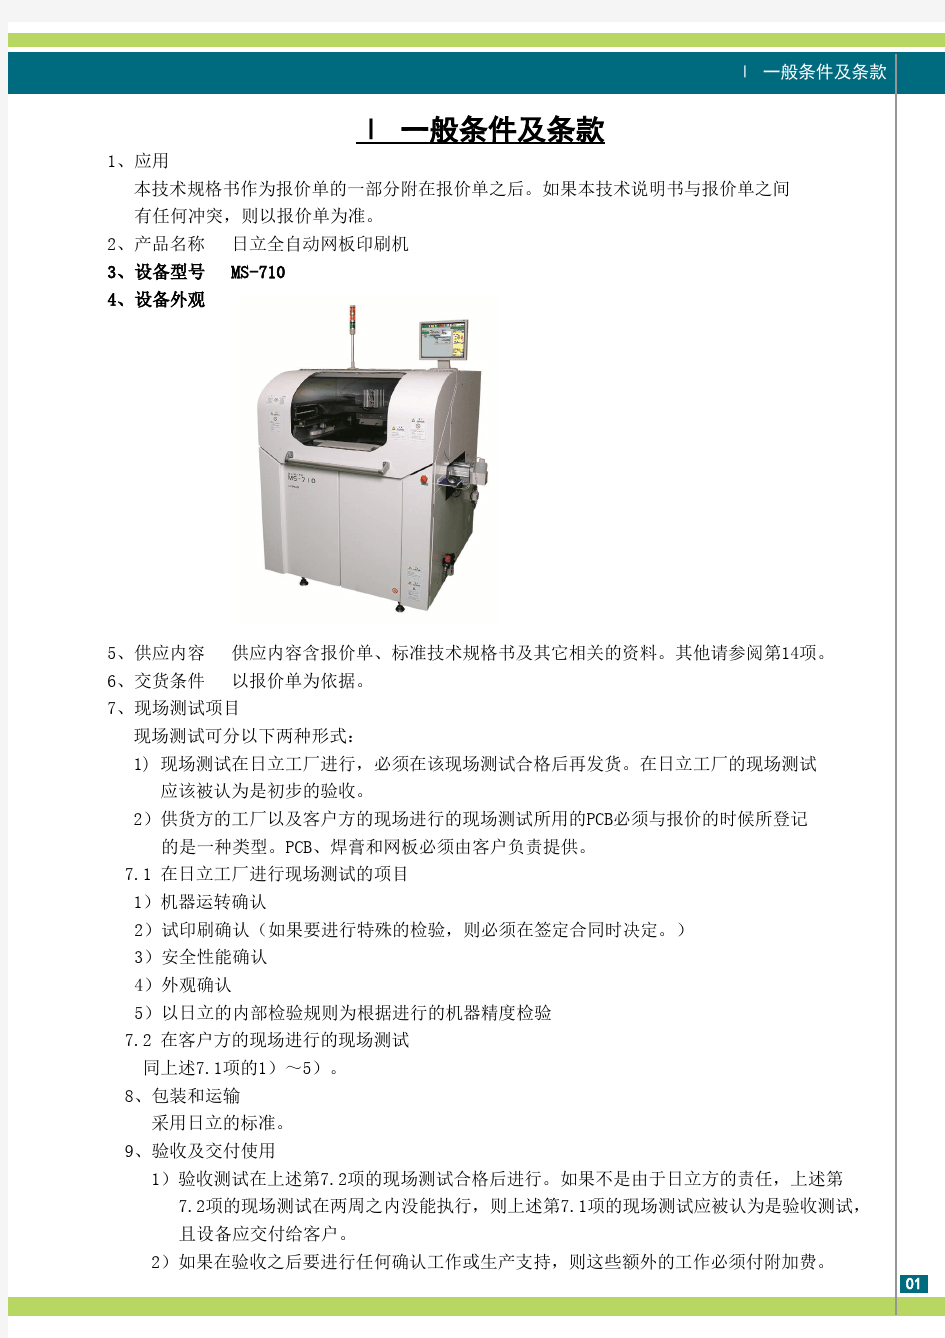 Hitachi印刷机MS-710